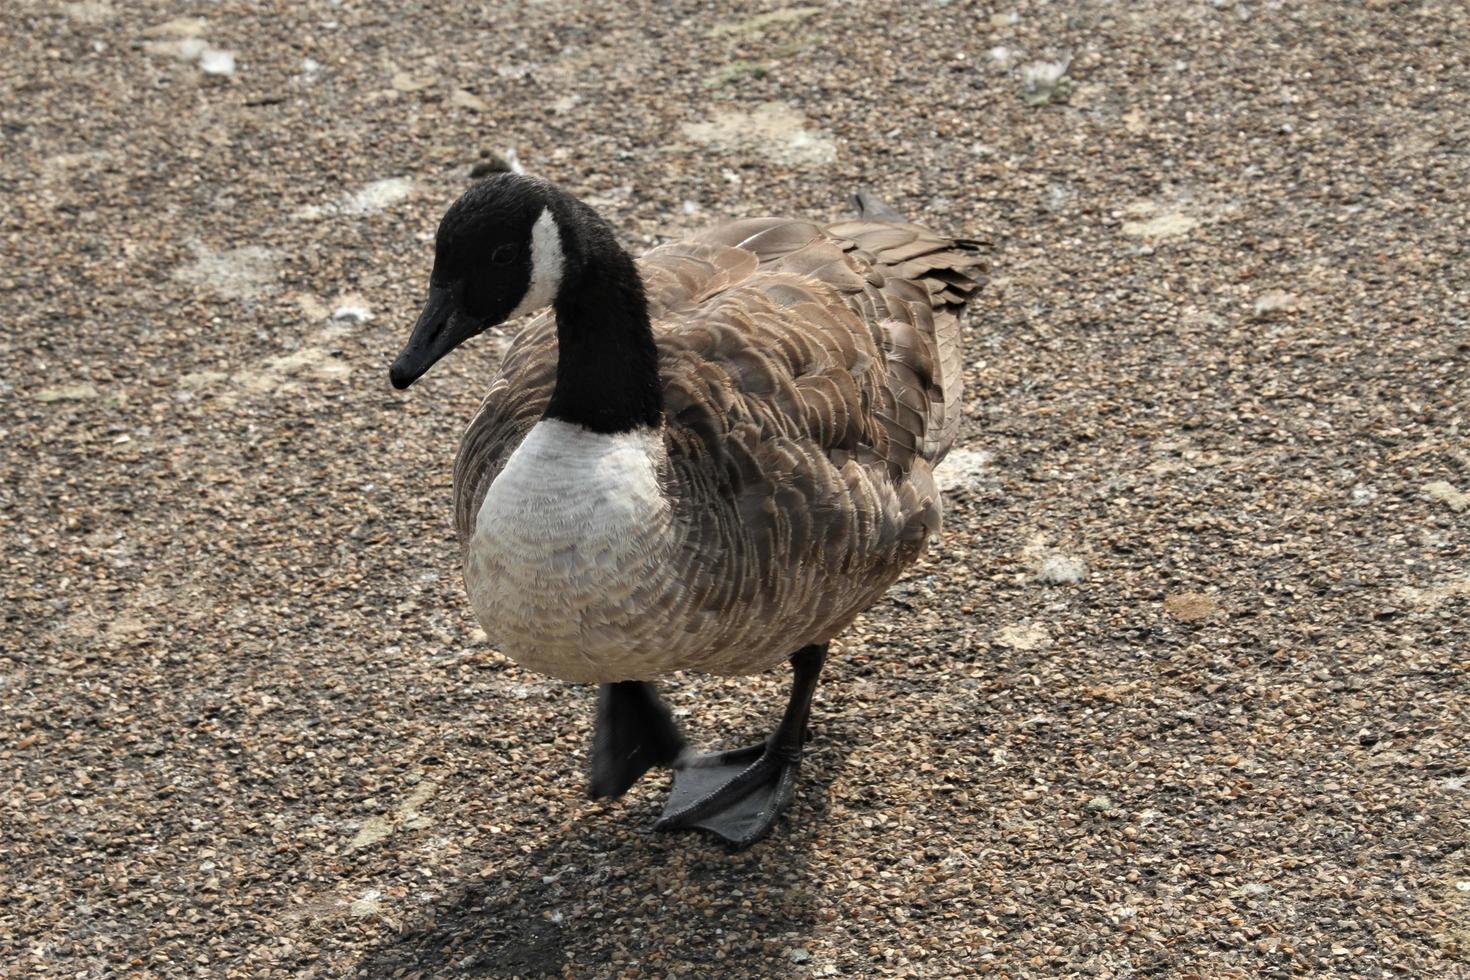 A close up of a Canada Goose photo